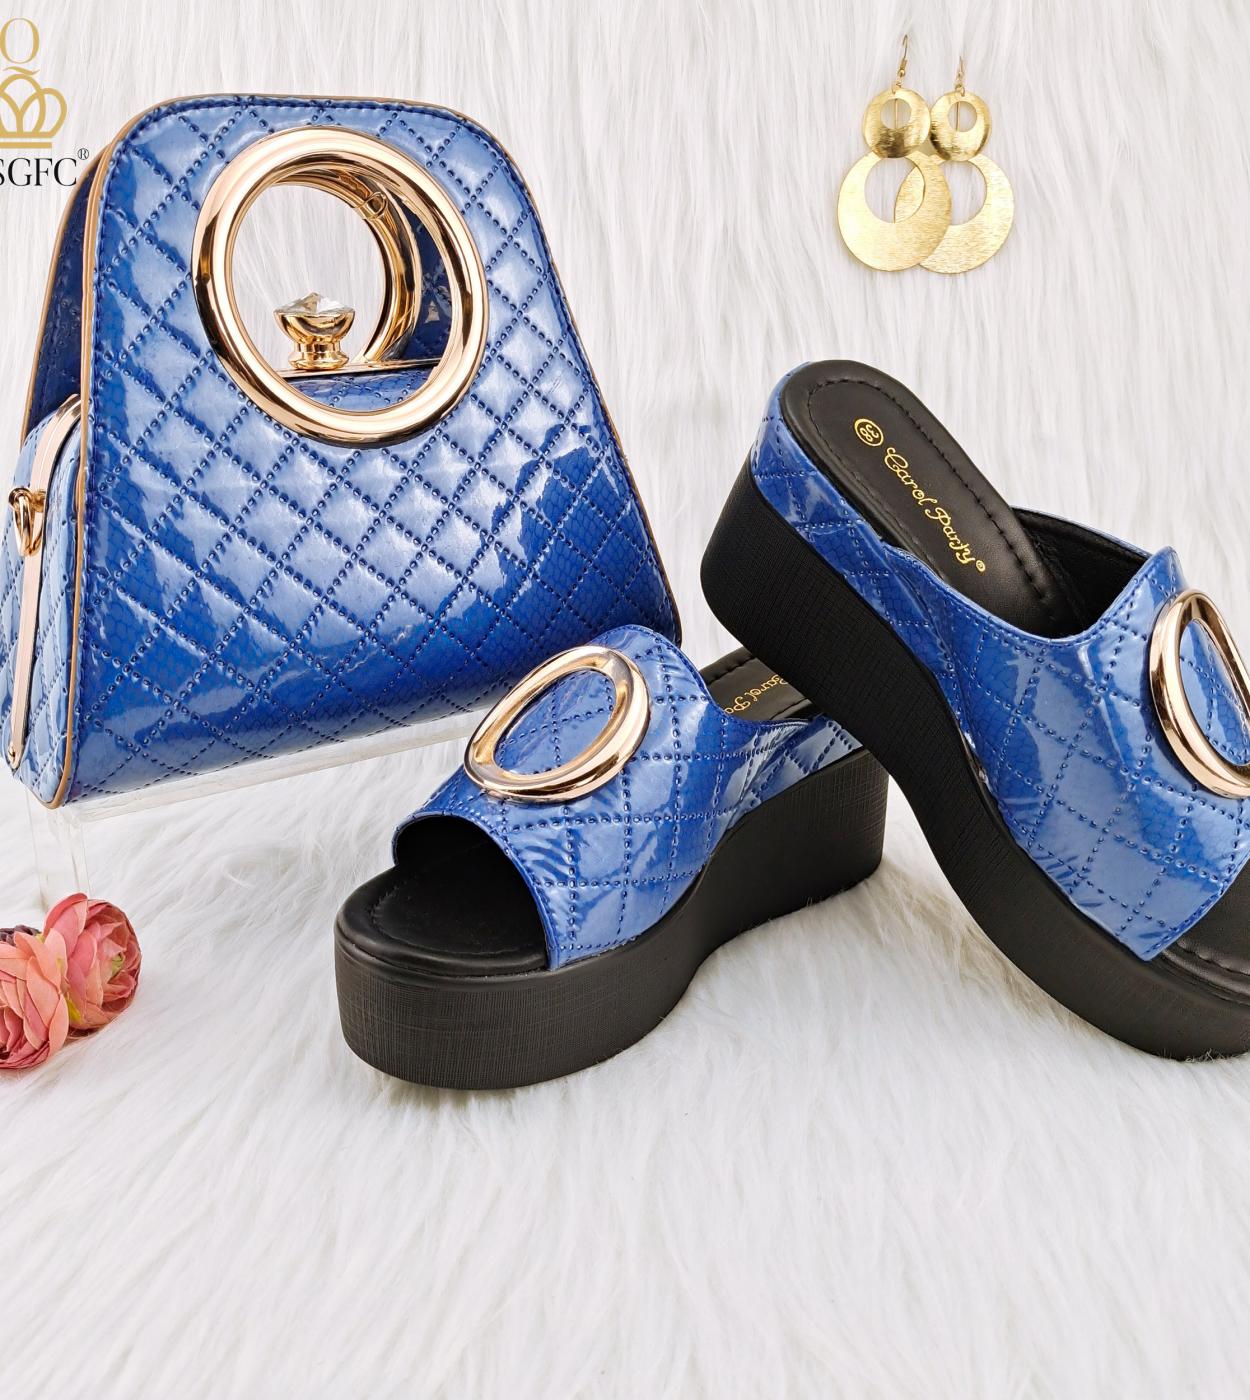 qsgfc חדש כחול פשוט אופנה אדוות מים עם חגורה דקורטיבית מתכת פלטפורמה עמידה למים סנדלים לנשים נעלי ותיק